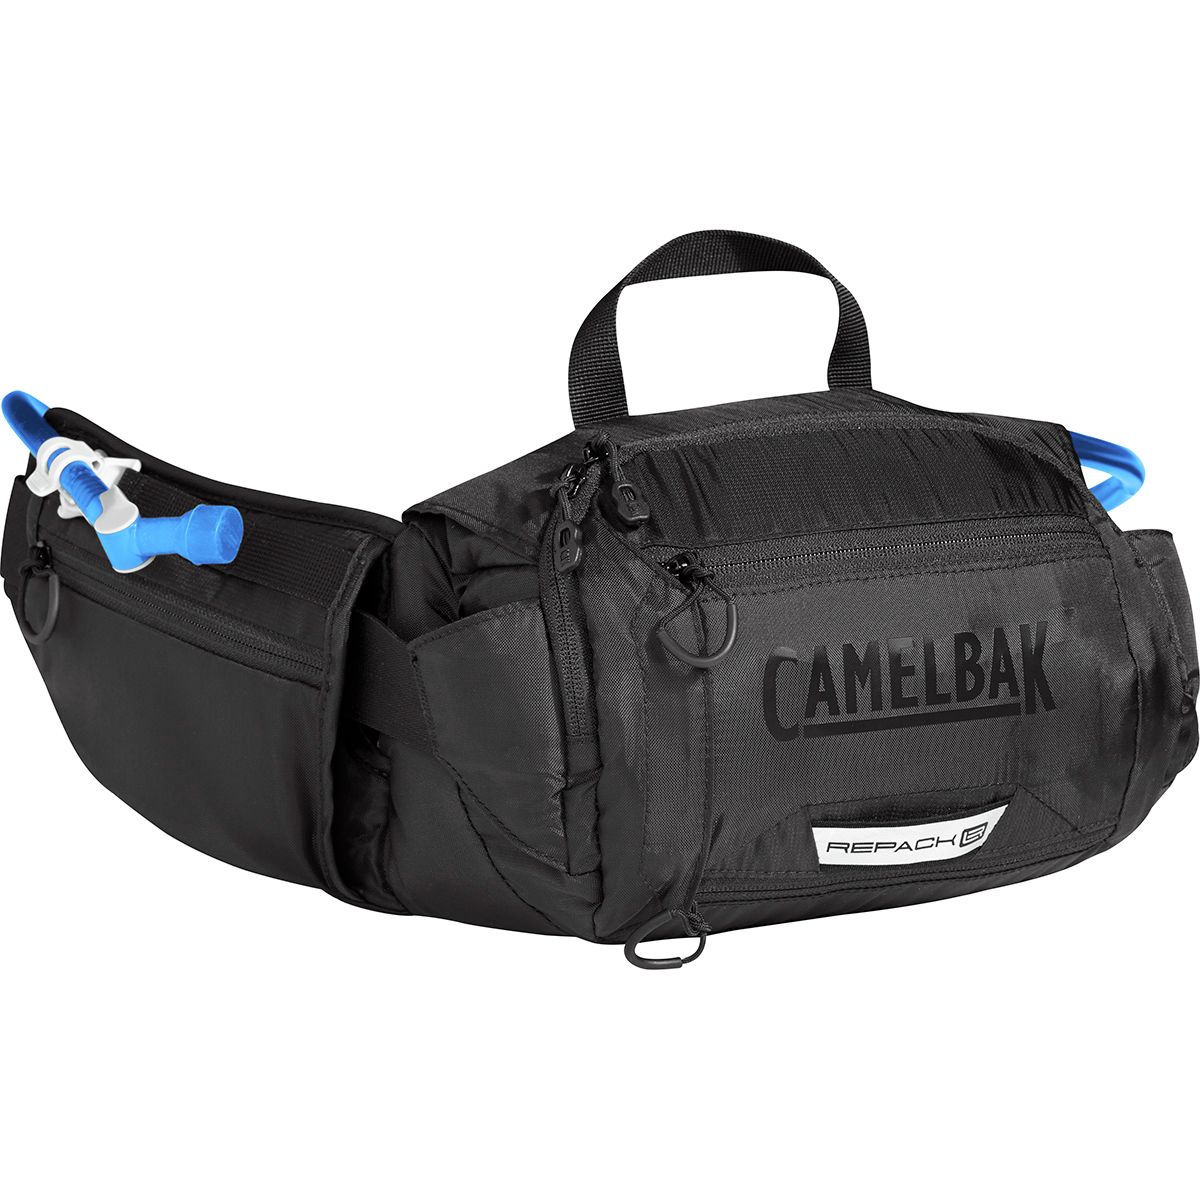 CamelBak Repack LR 4L Backpack